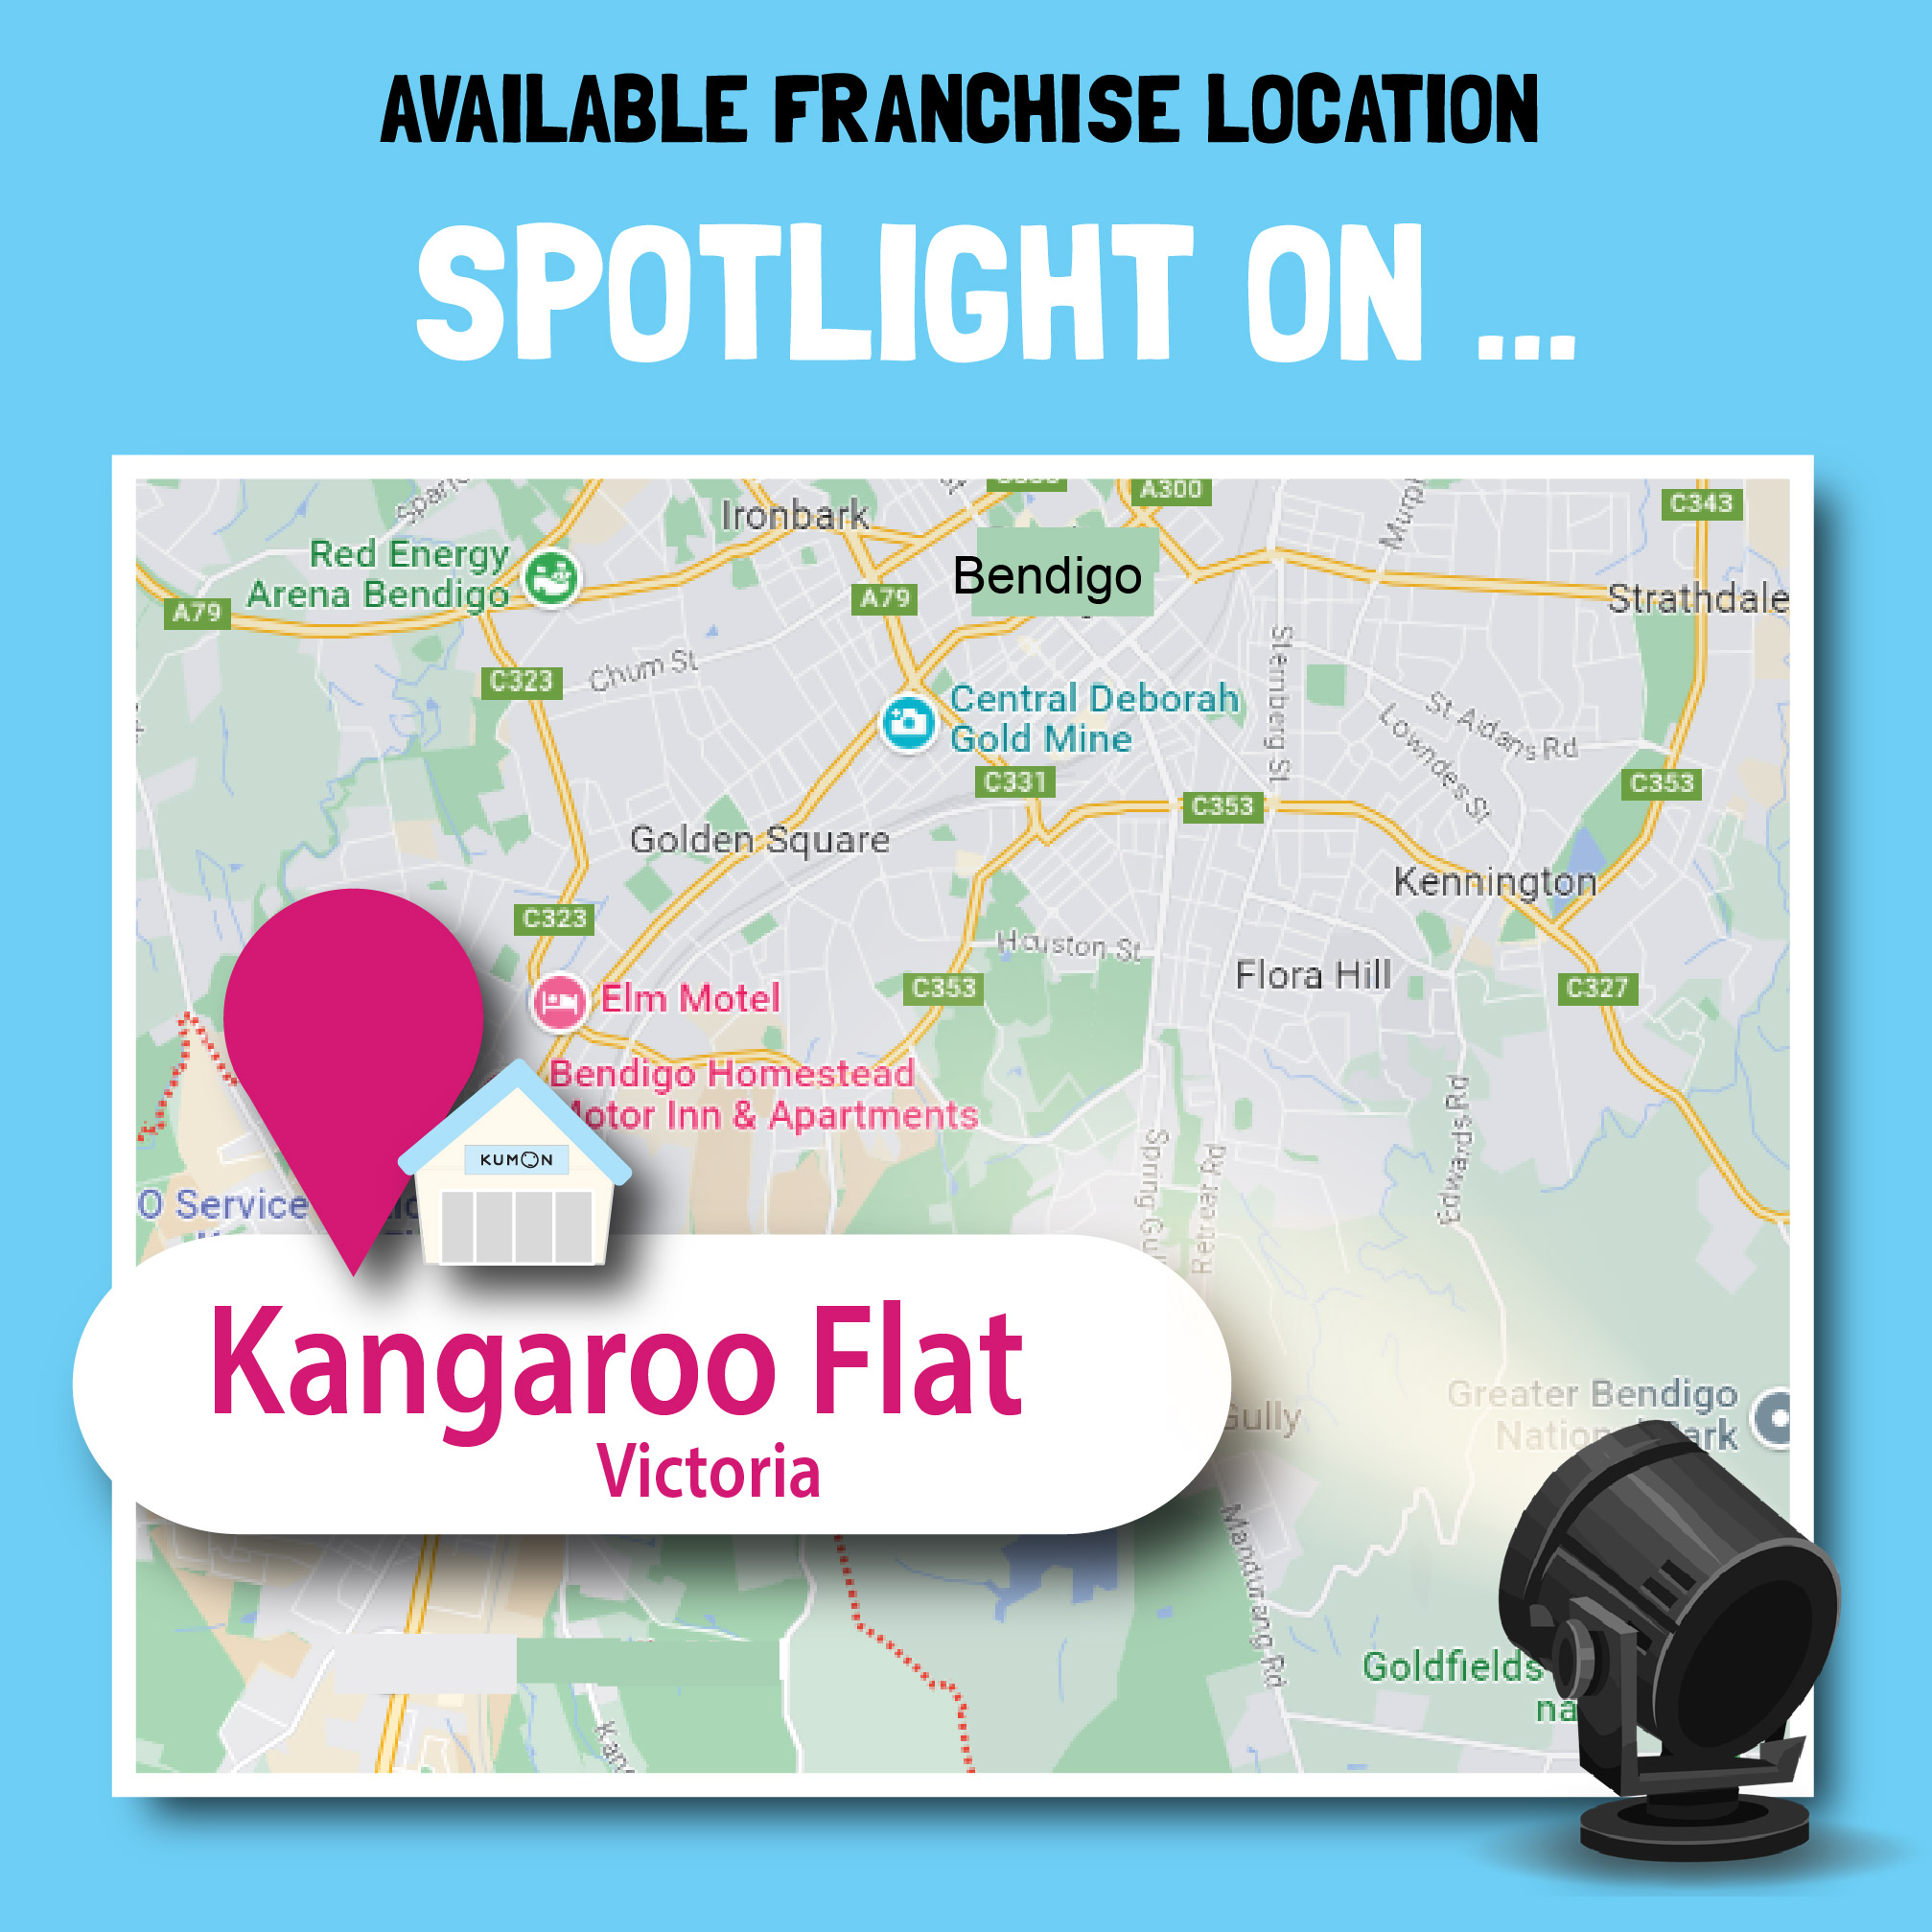 Consider opening a Kumon franchise in Kangaroo Flat, Victoria